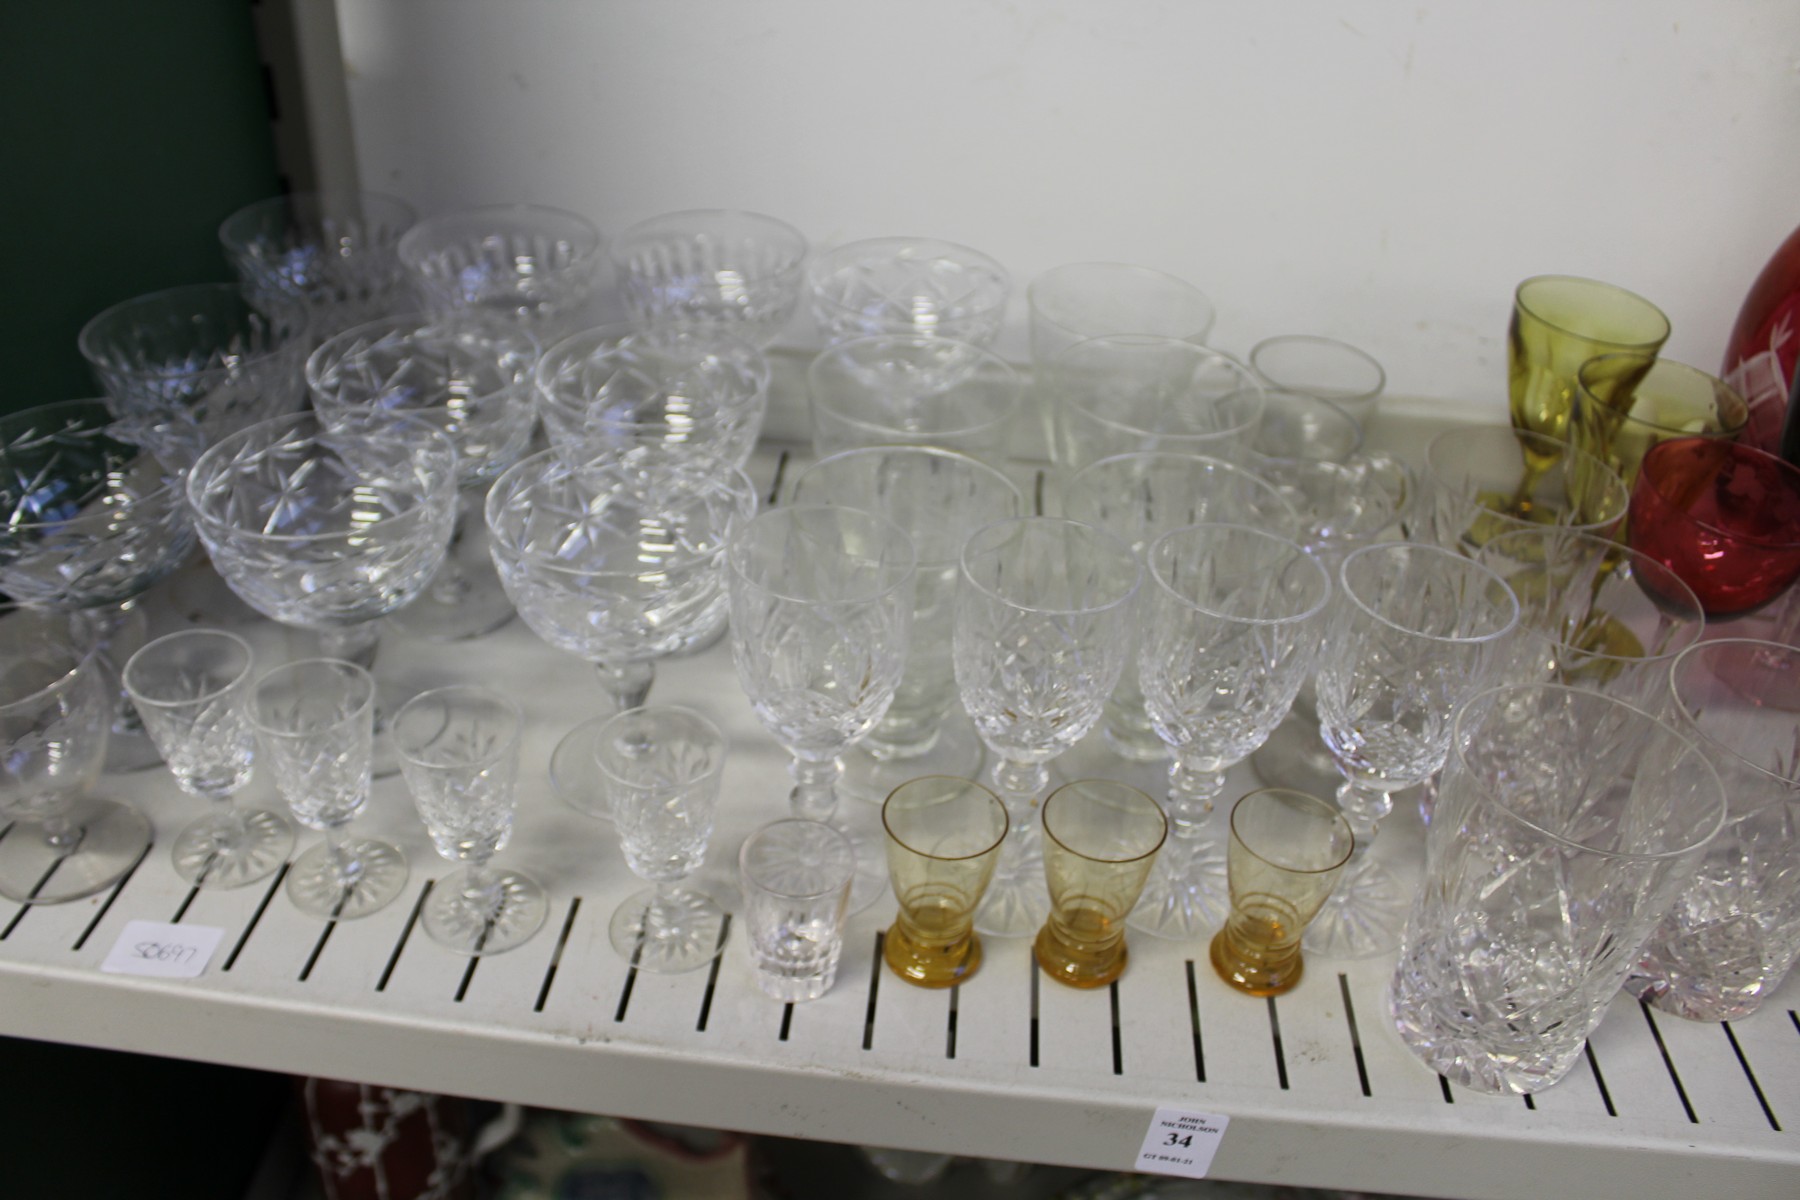 Cut glass champagne glasses, colourful glassware etc. - Image 3 of 3